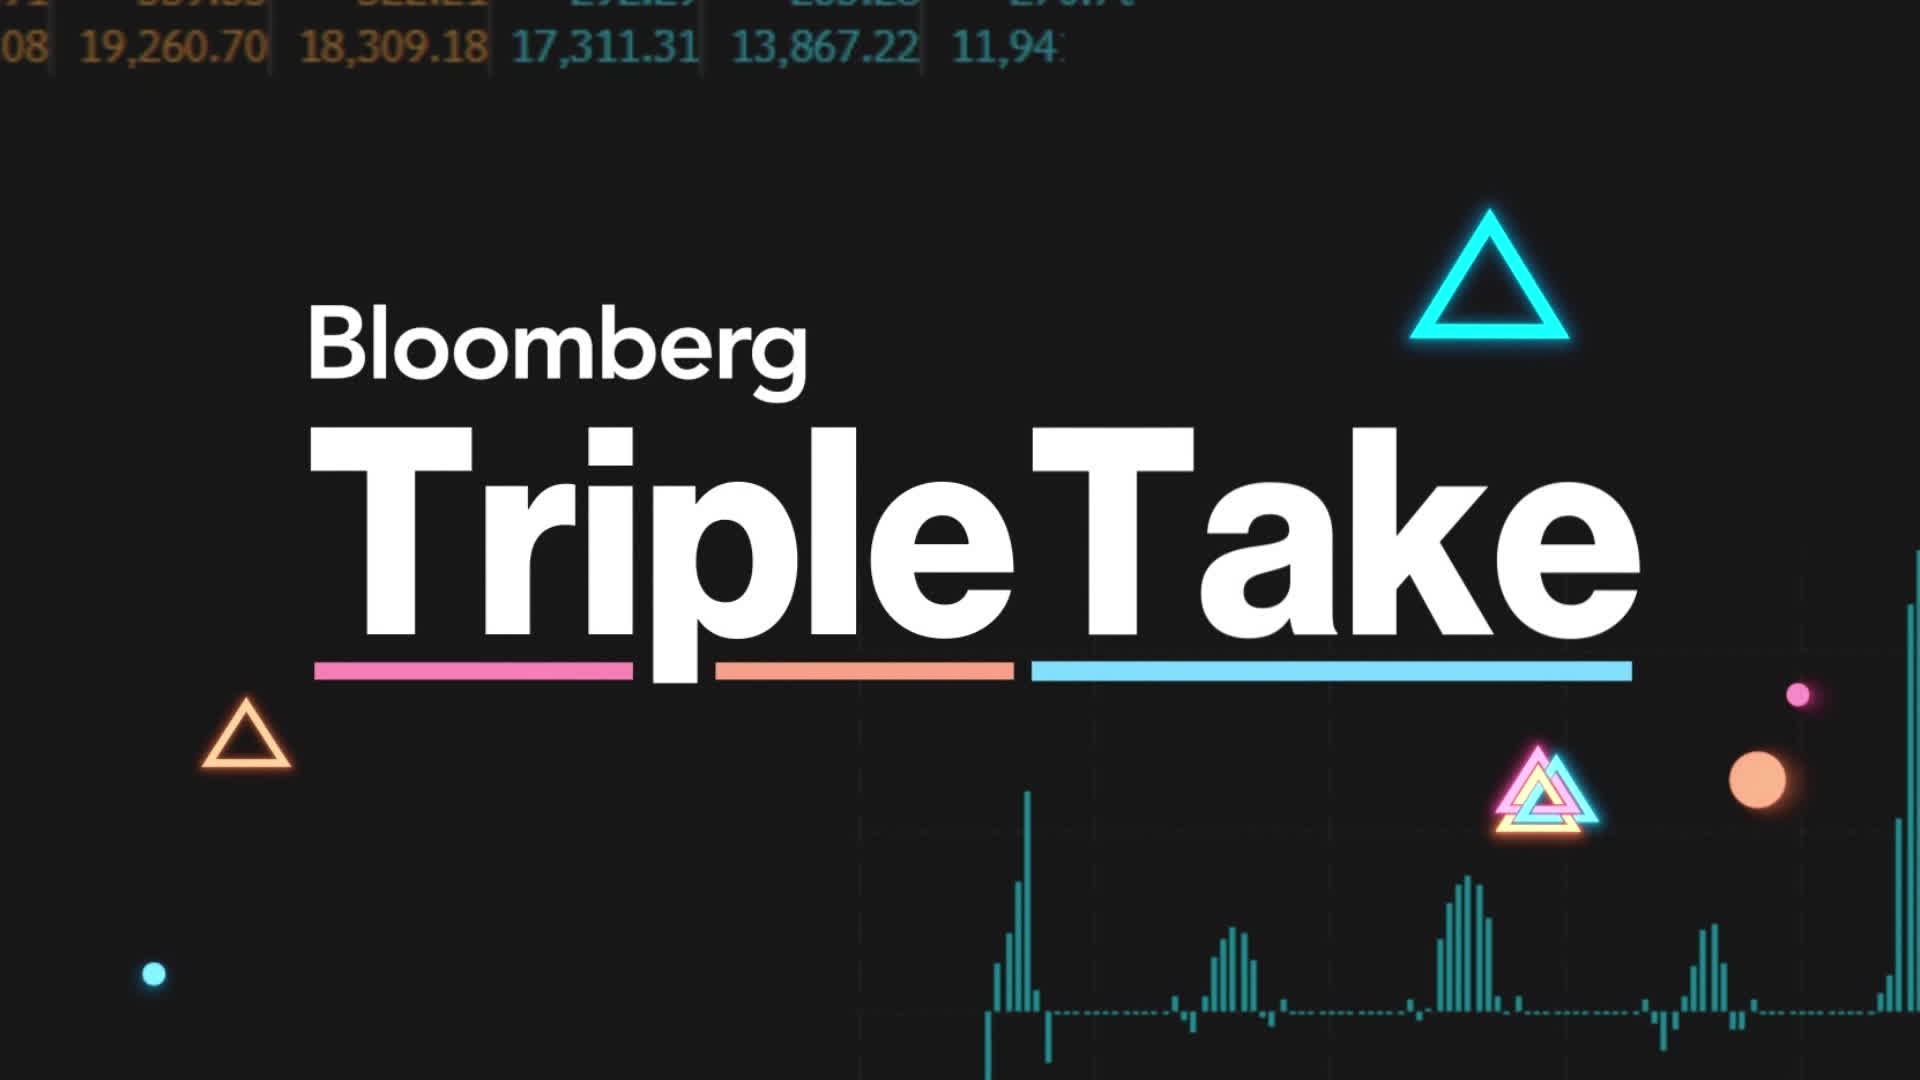 Bloomberg Markets: Triple Take (07/05/2022)